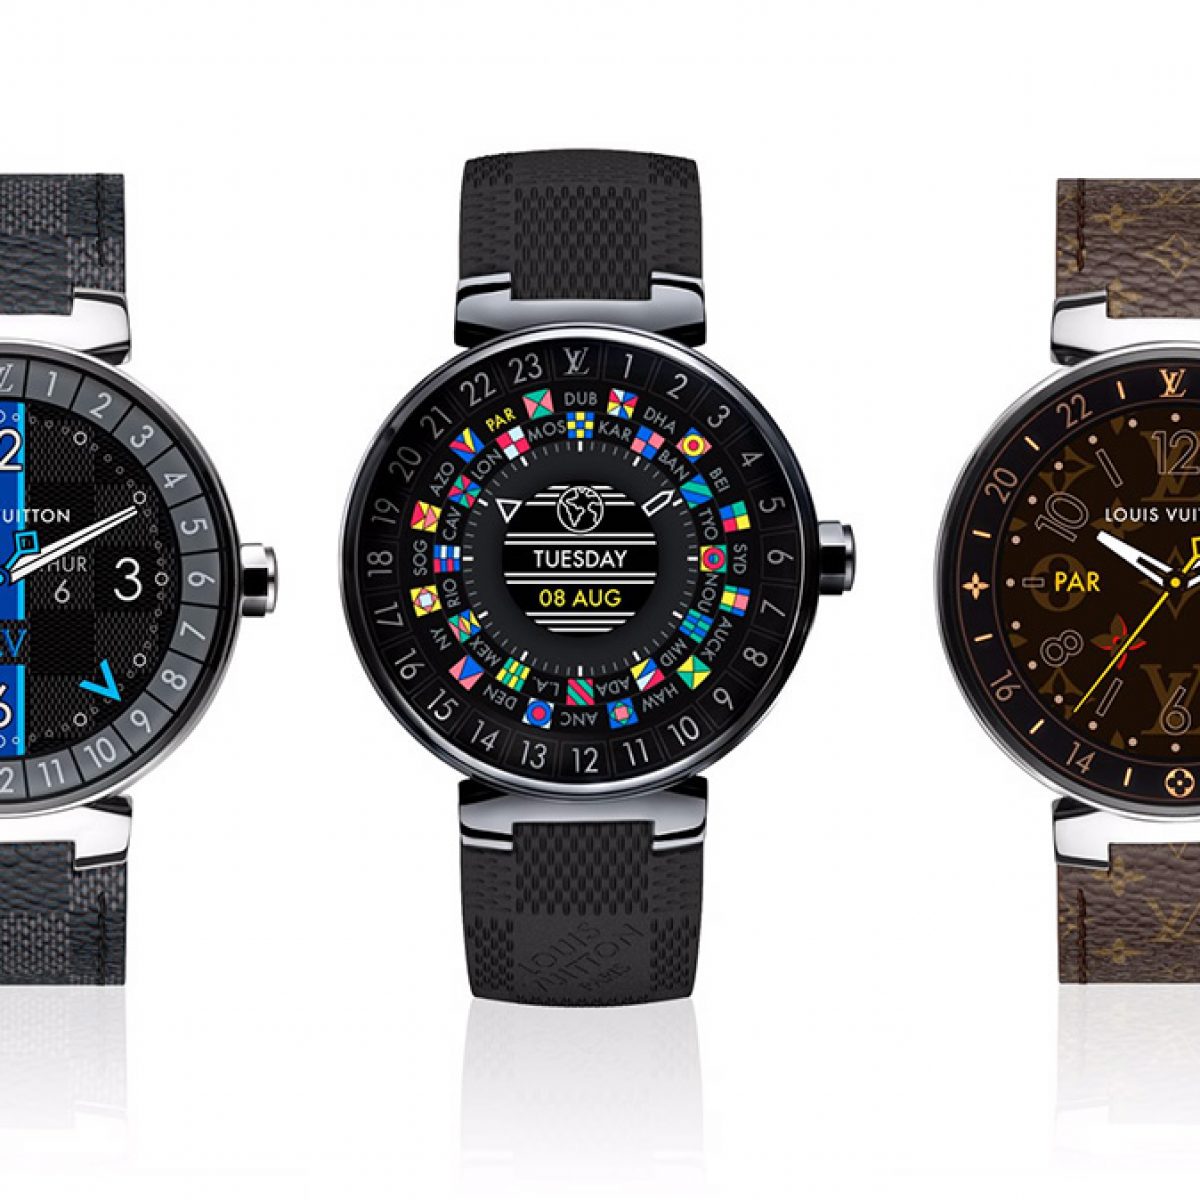 horizon smartwatch price